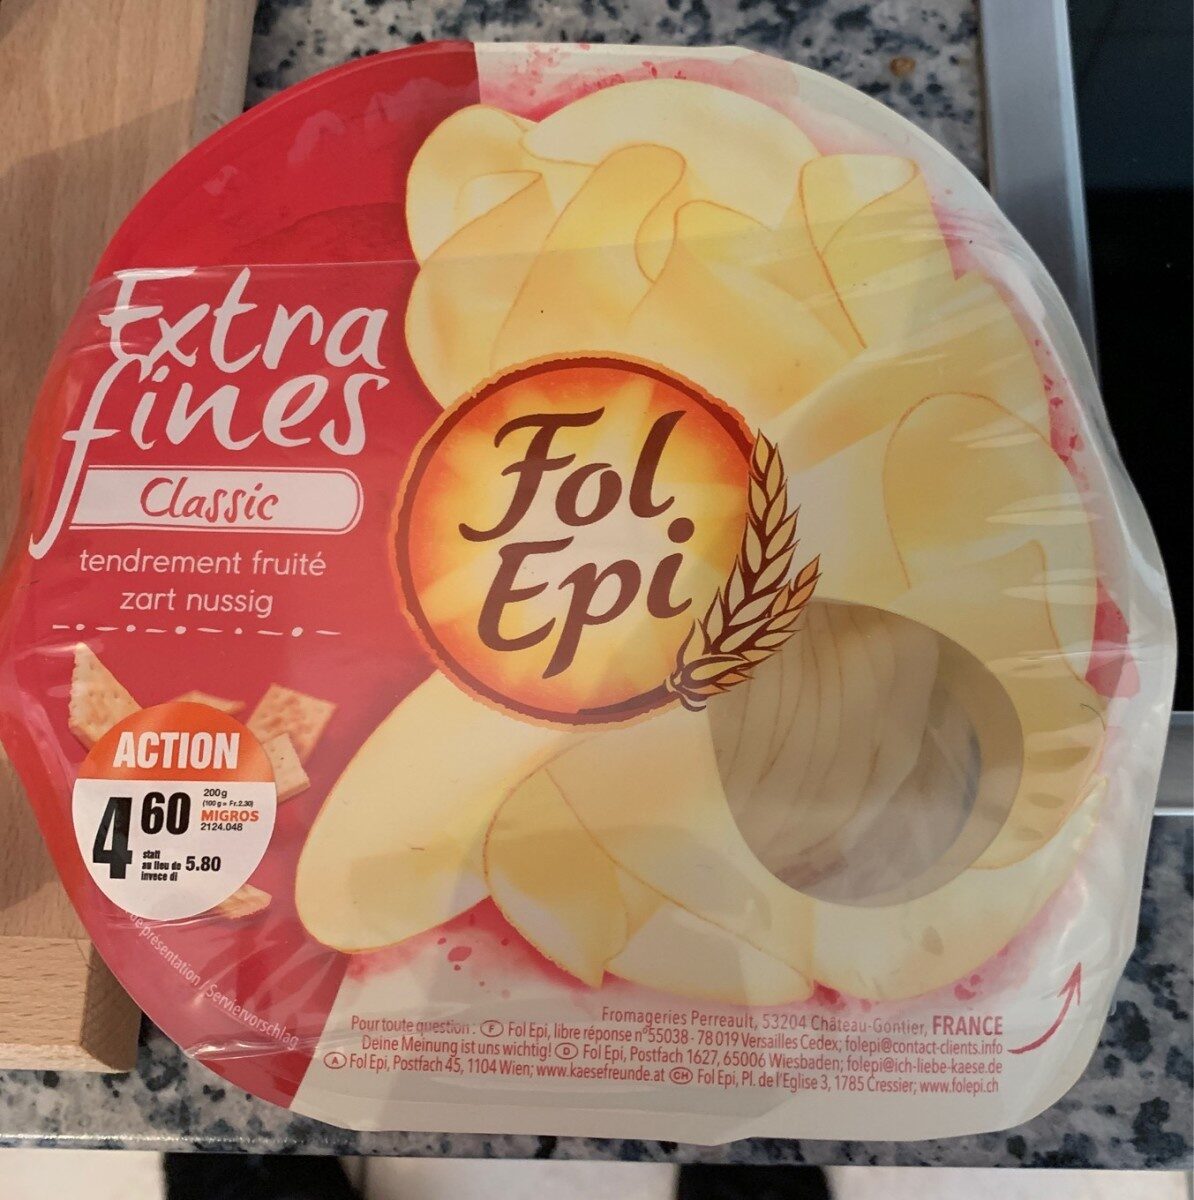 Fol Epi - extra fines Classic - Product - fr